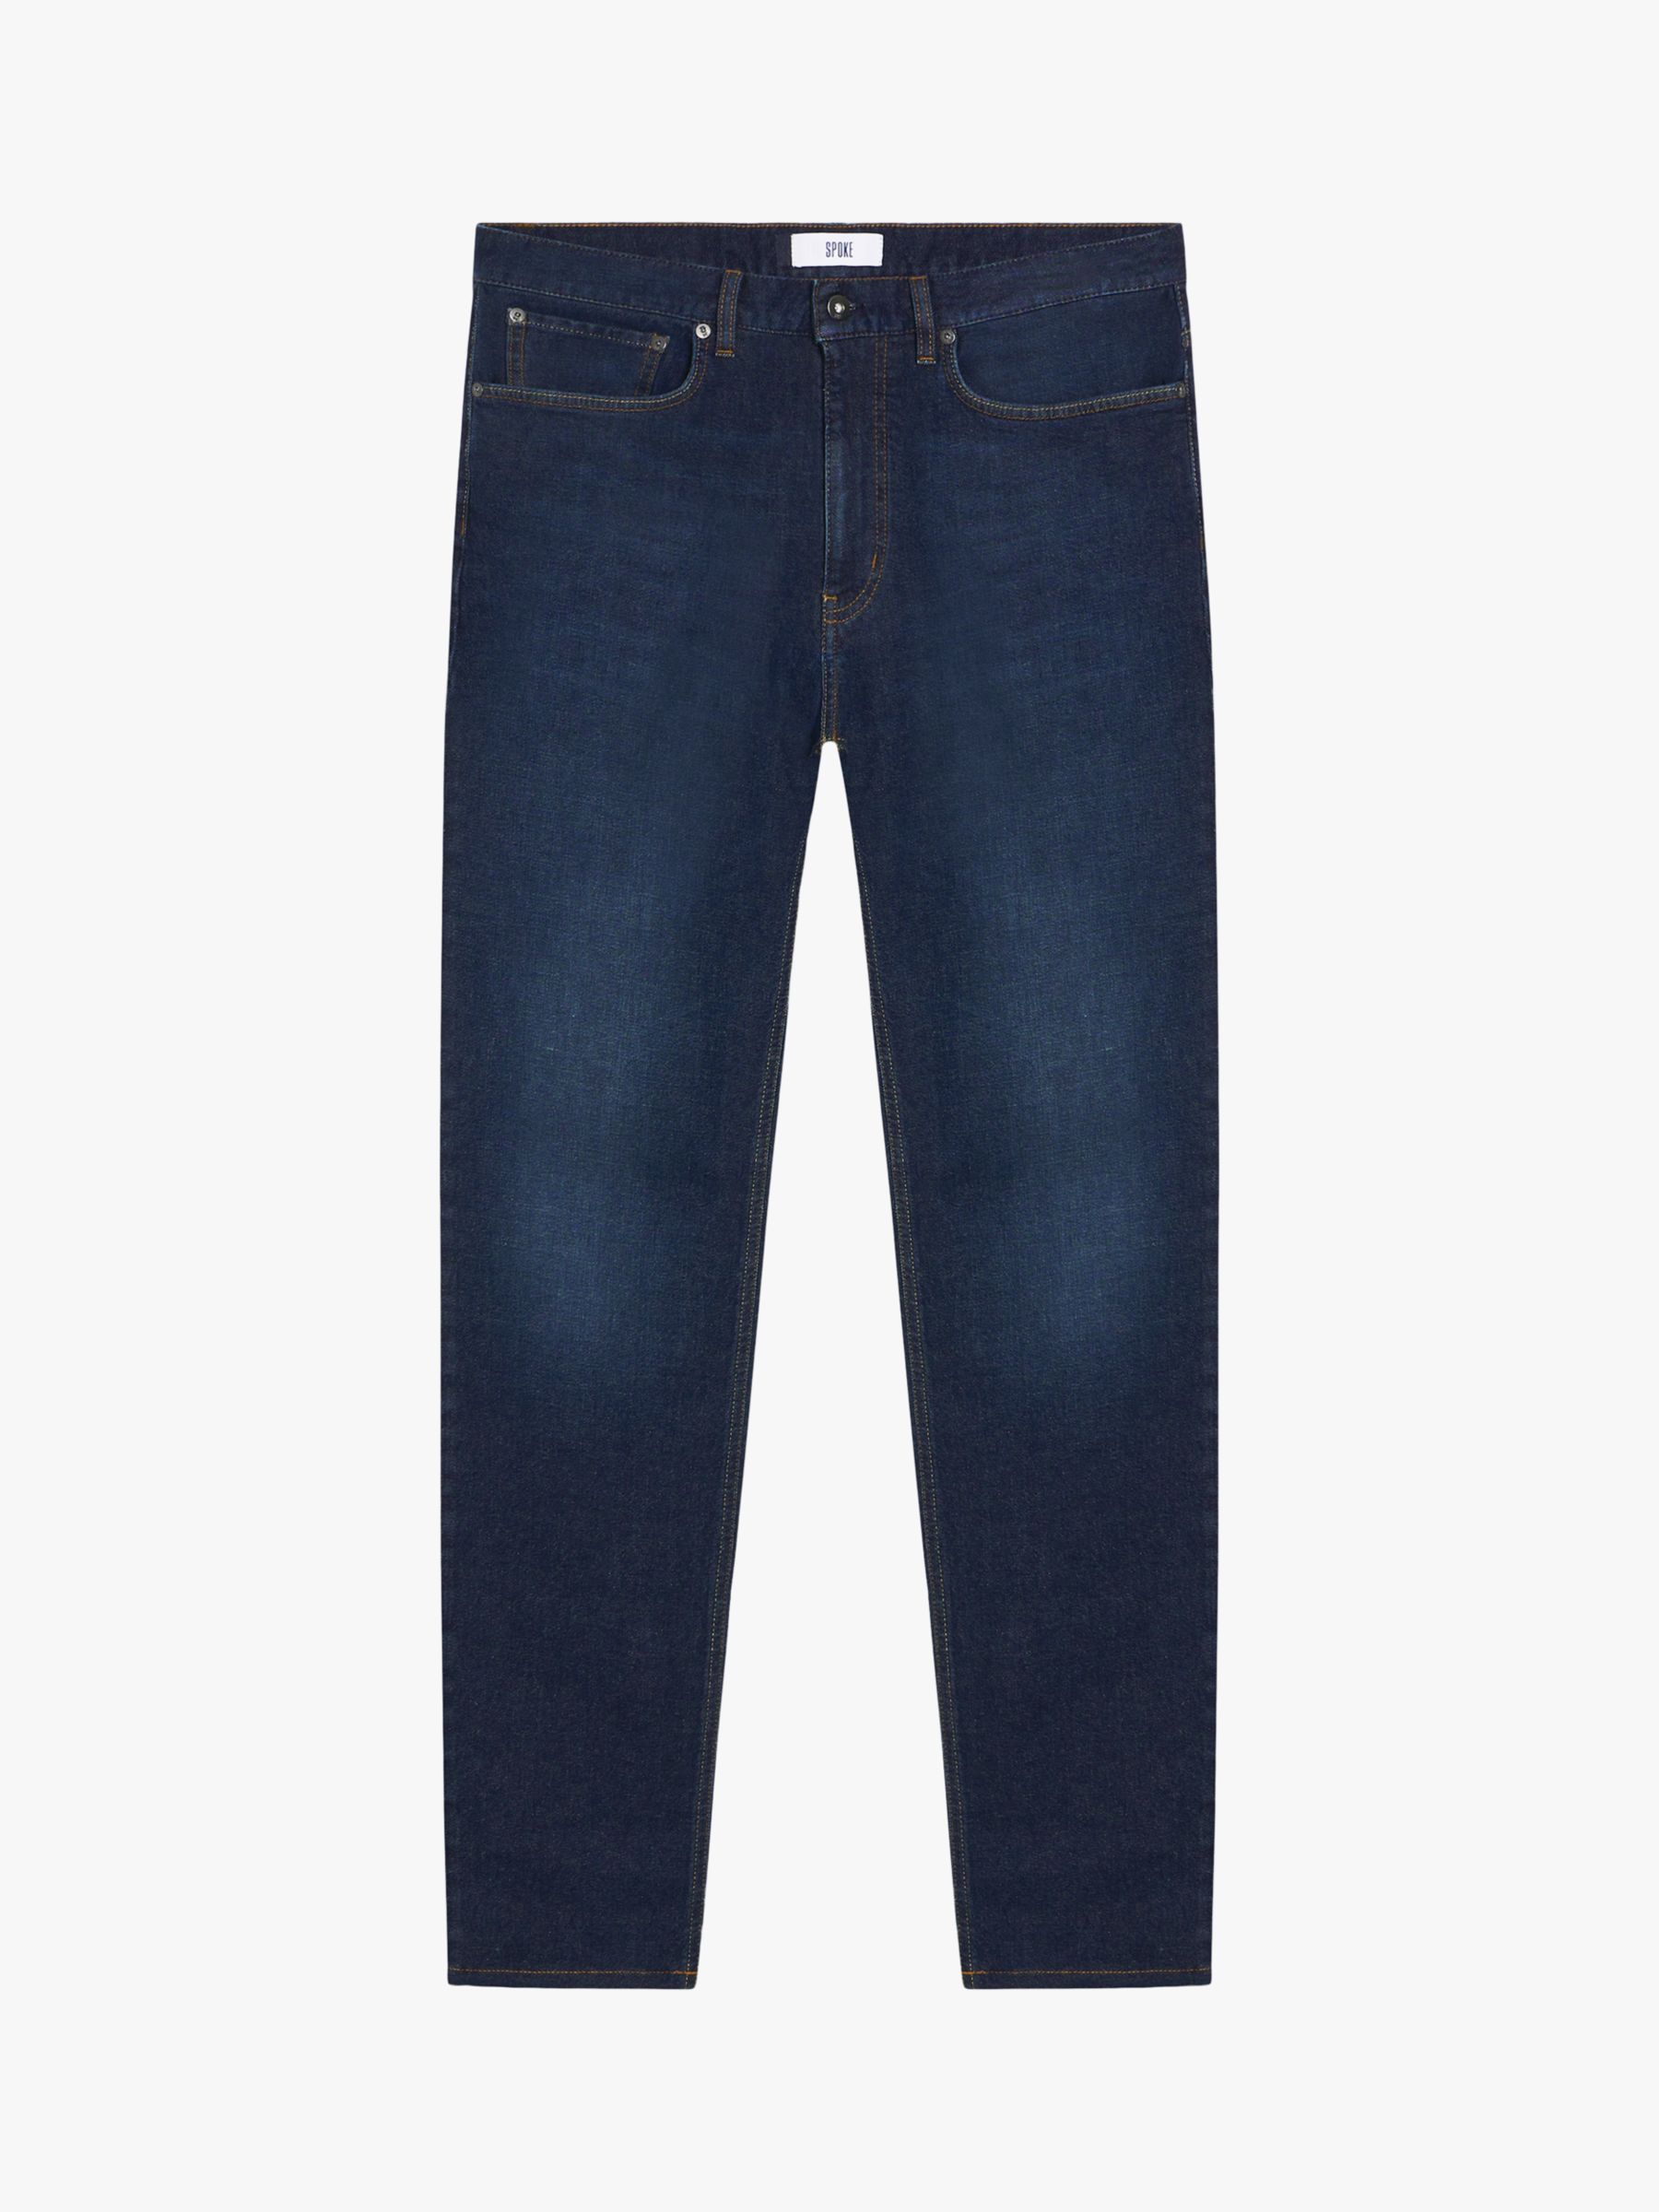 SPOKE 12oz Denim Broad Thigh Jeans, Broken In at John Lewis & Partners